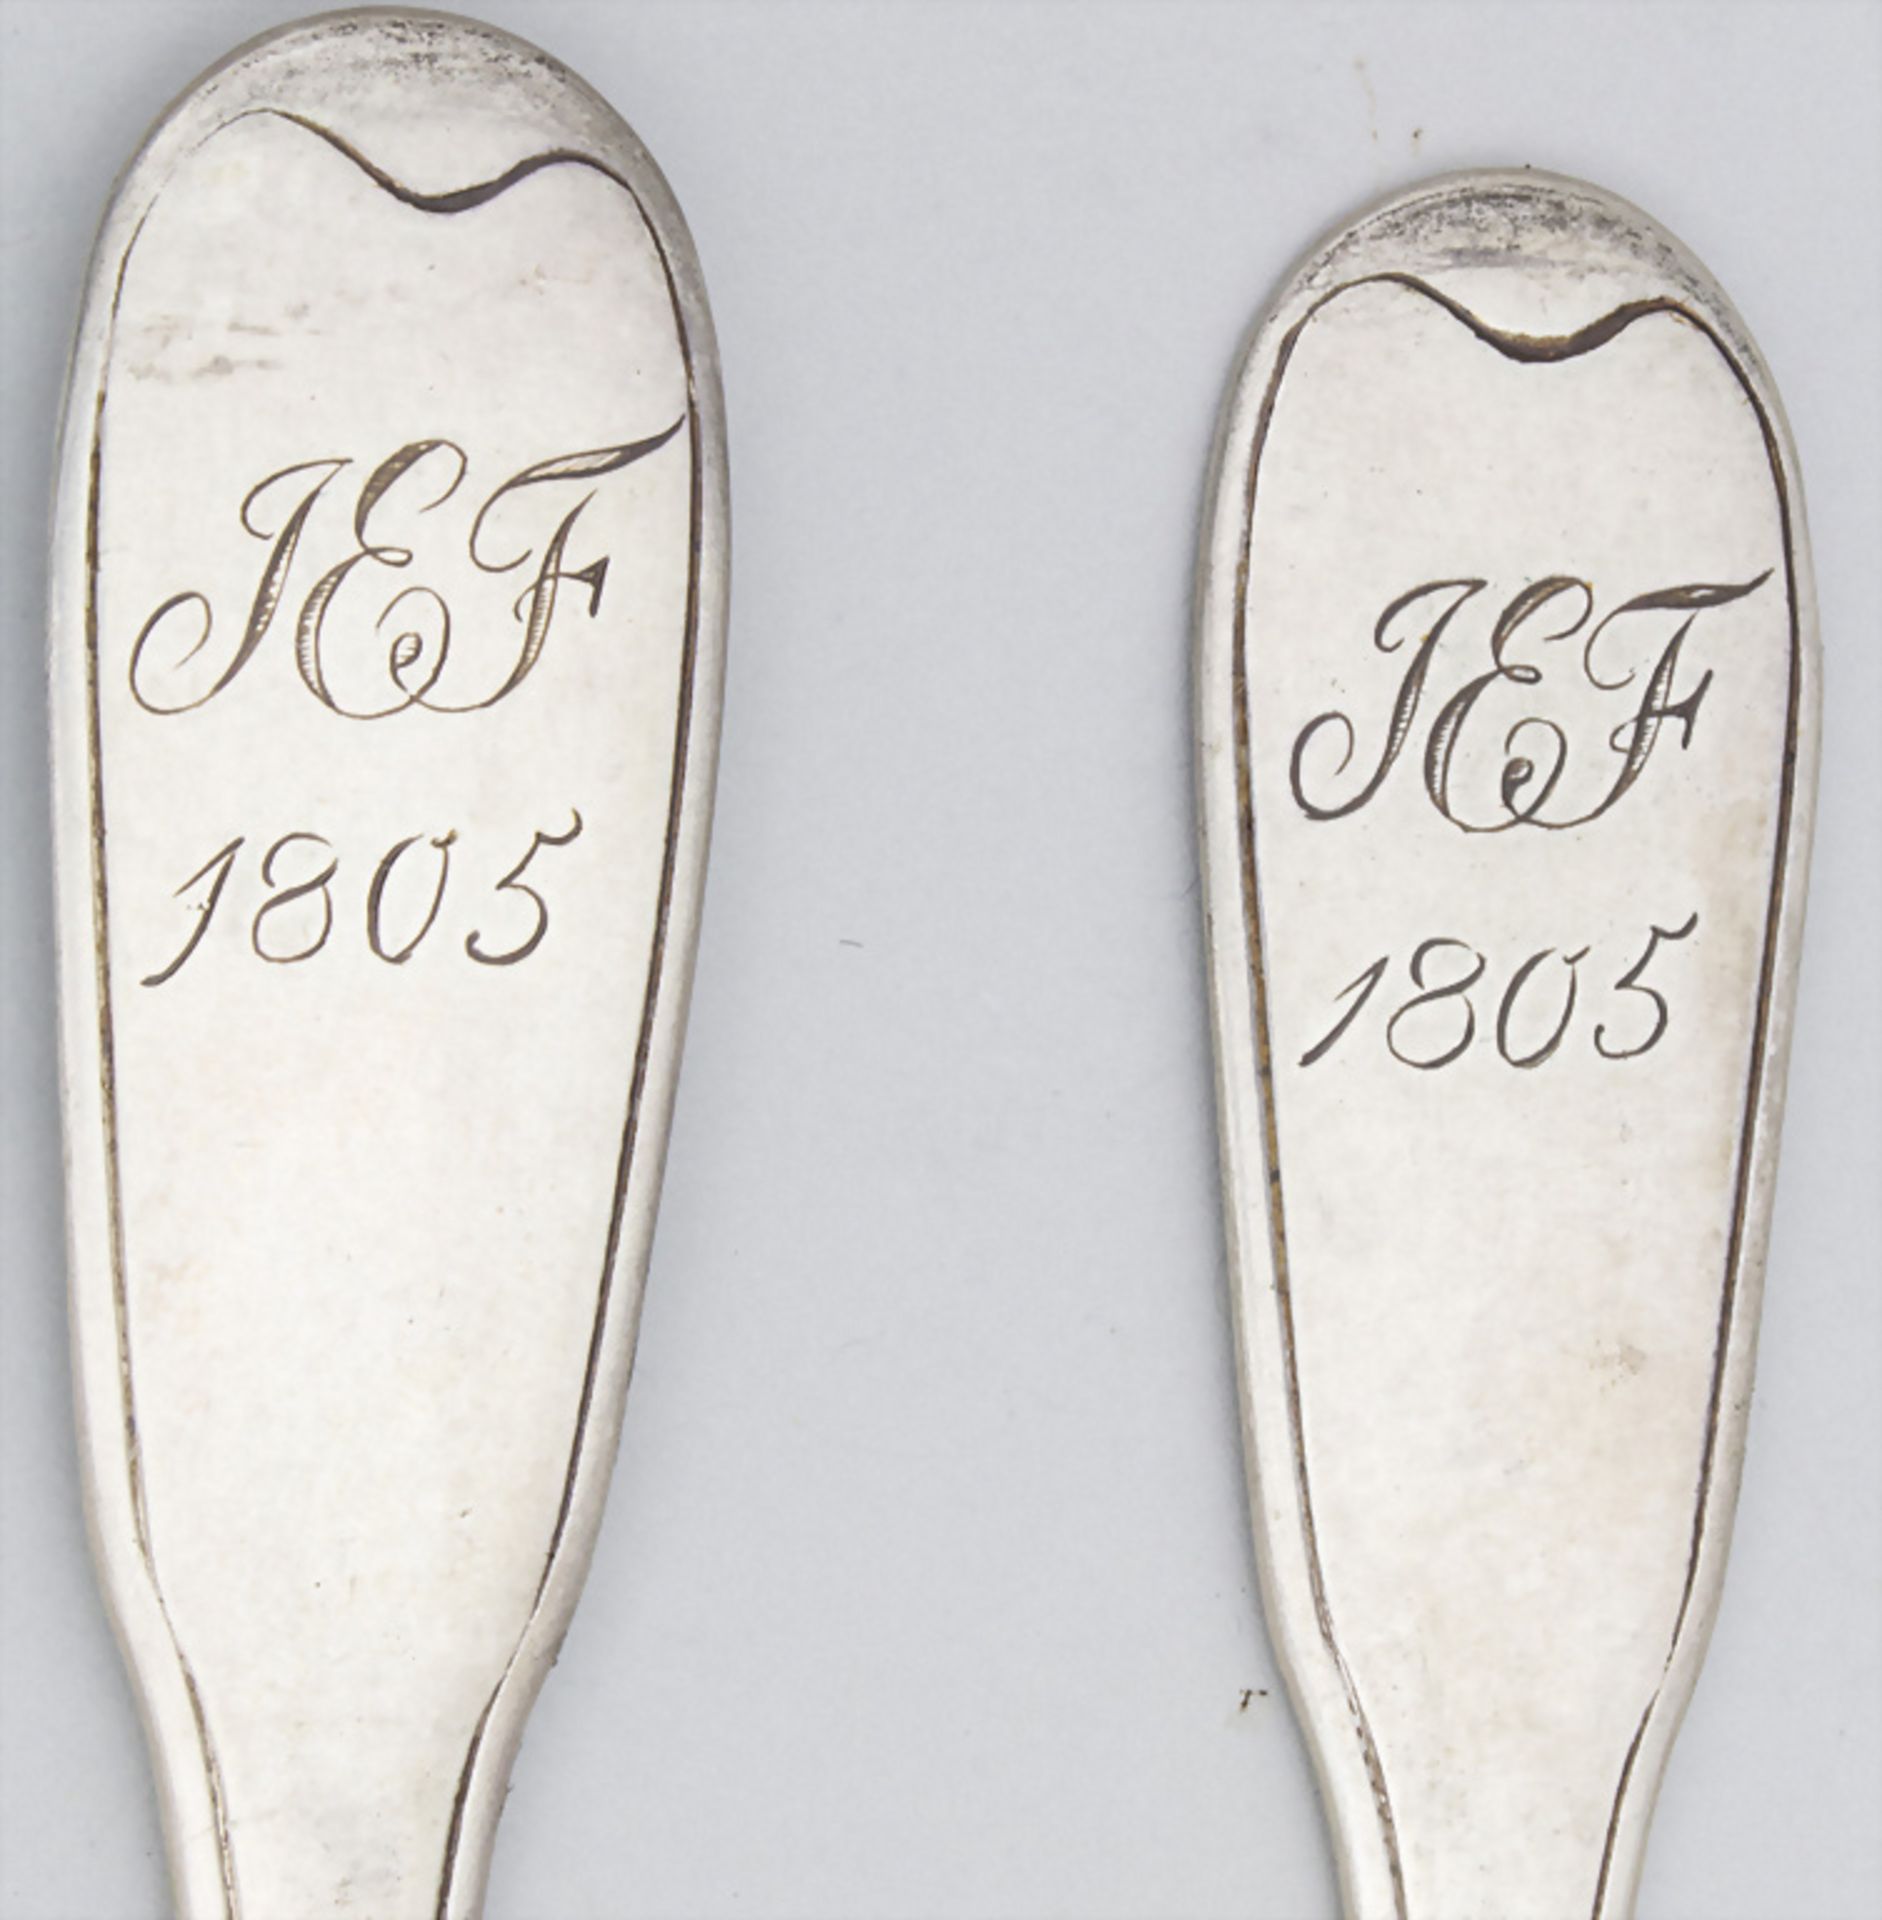 6 Löffel / 6 silver spoons, Johann Heinrich Philipp Schott, Frankfurt, 1805 - Image 5 of 8